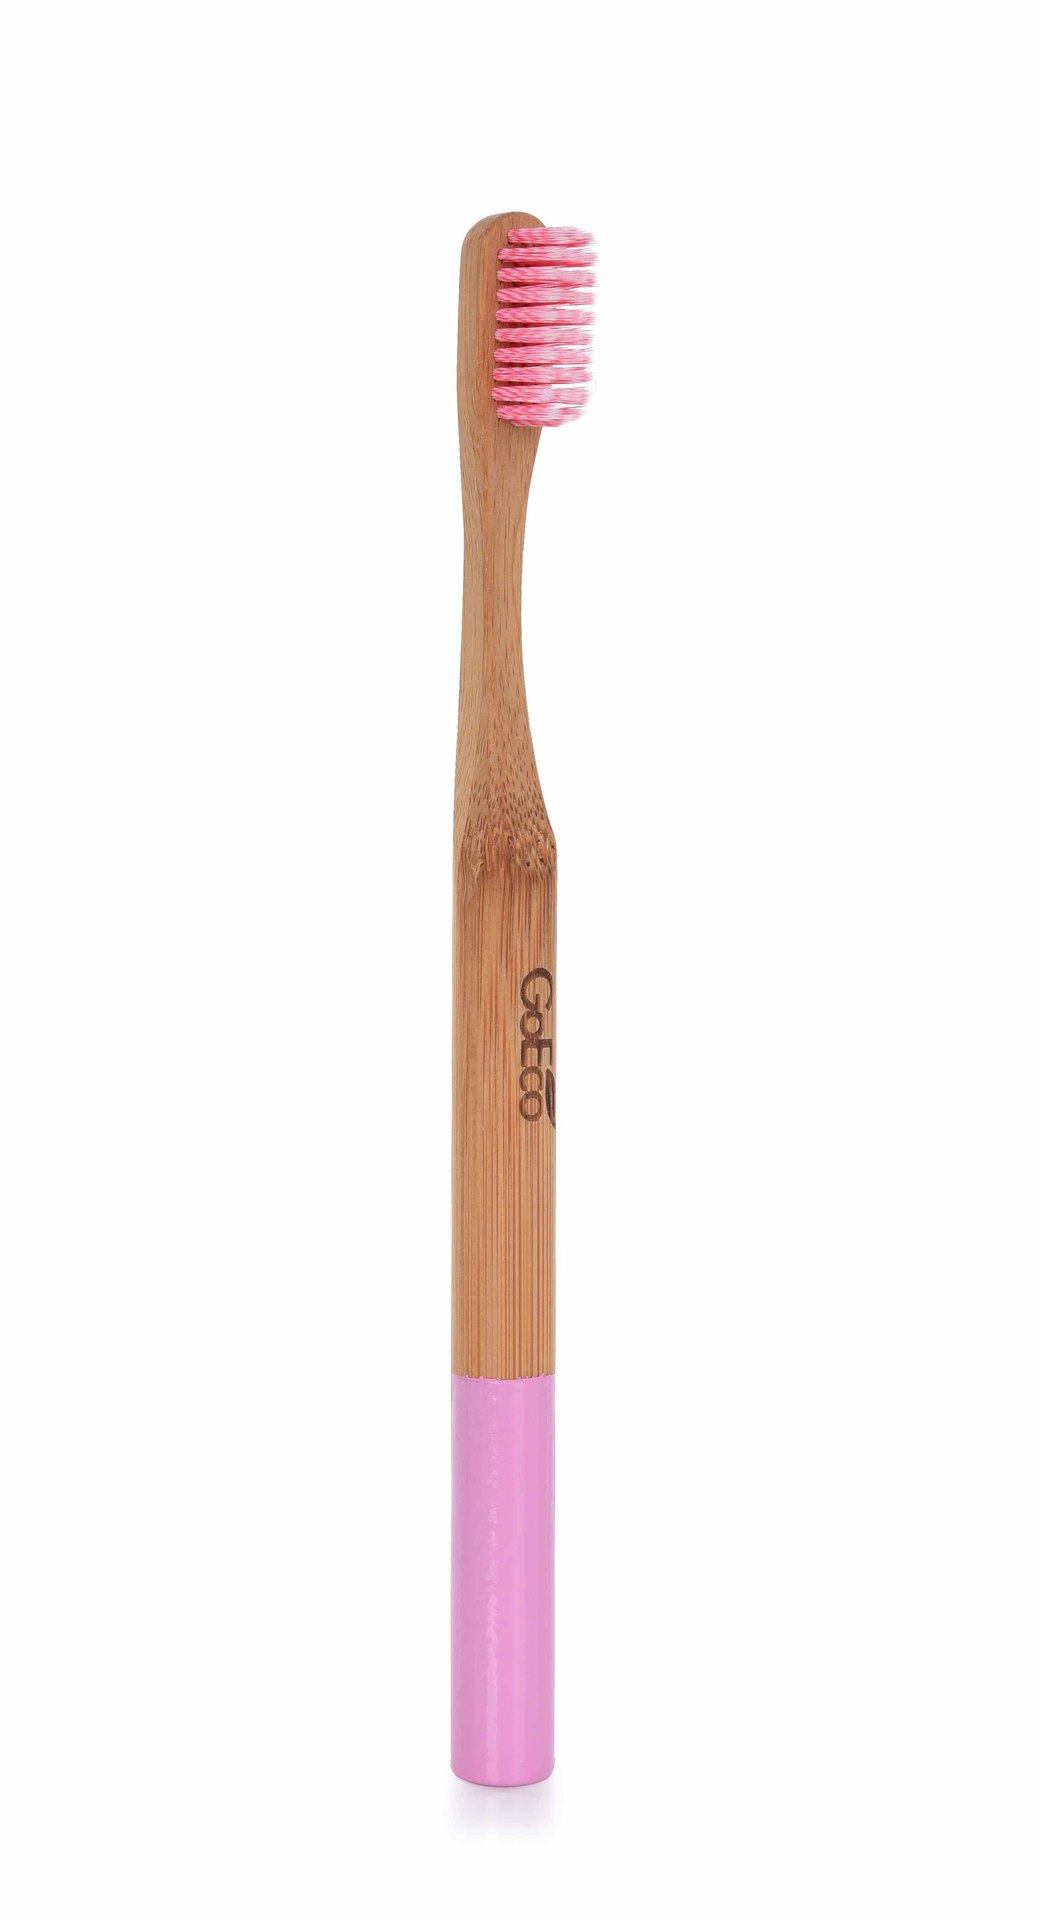 Zubná kefka GoEco® BAMBOO, z vysokotlakového bambusu s veľmi mäkkými štetinkami, ružová 